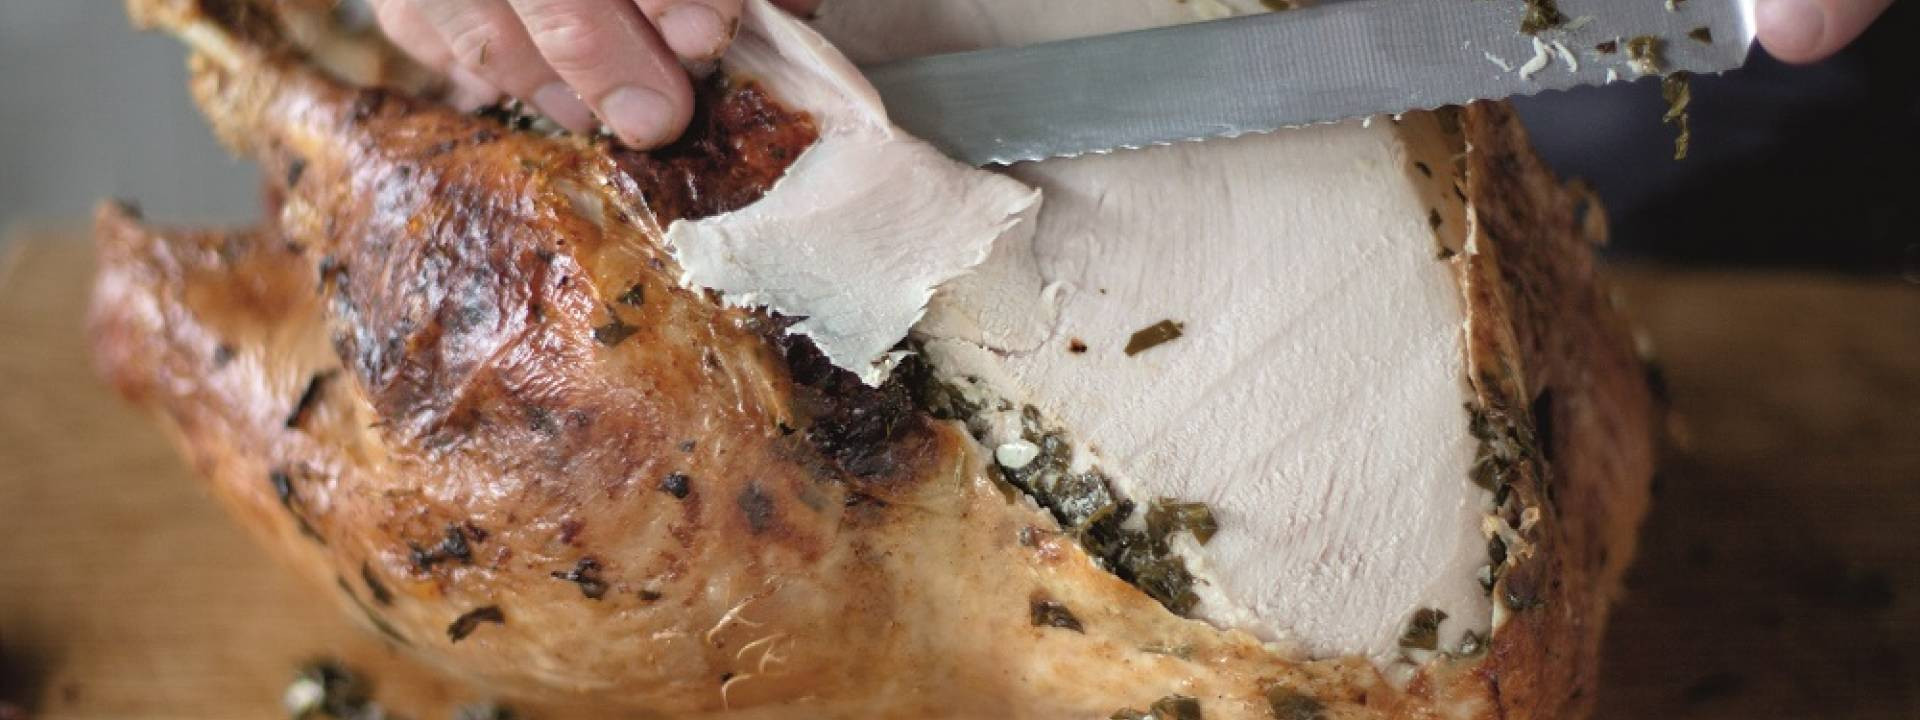 Gordon Ramsay - Christmas Turkey With Gravy
 Cooking